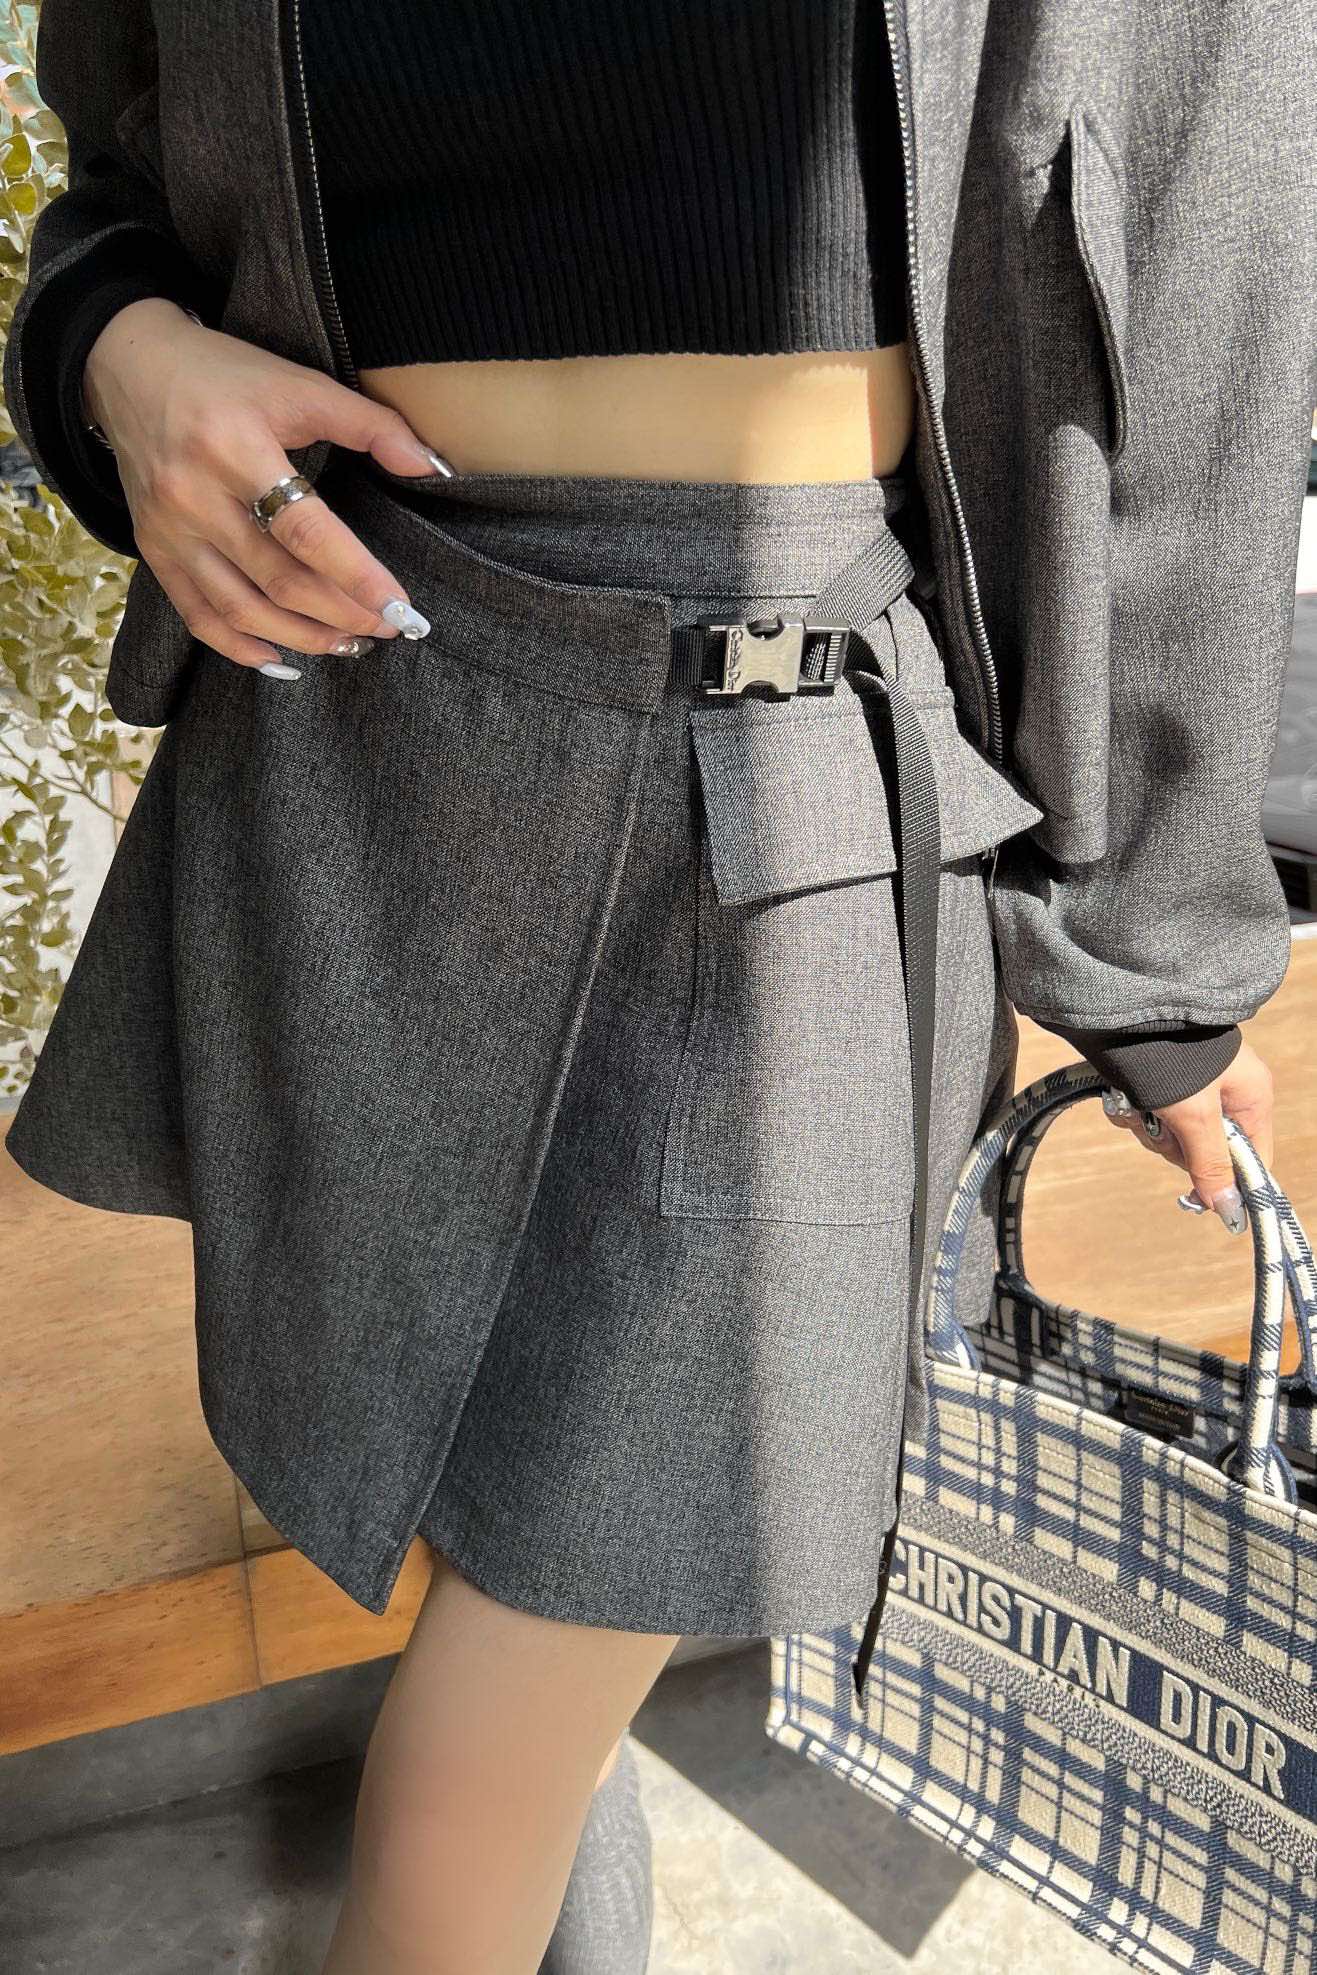 dior クラッチ バッグ激安通販 レディース スカートセット 可愛い ファッション カジュアル グレイ_3